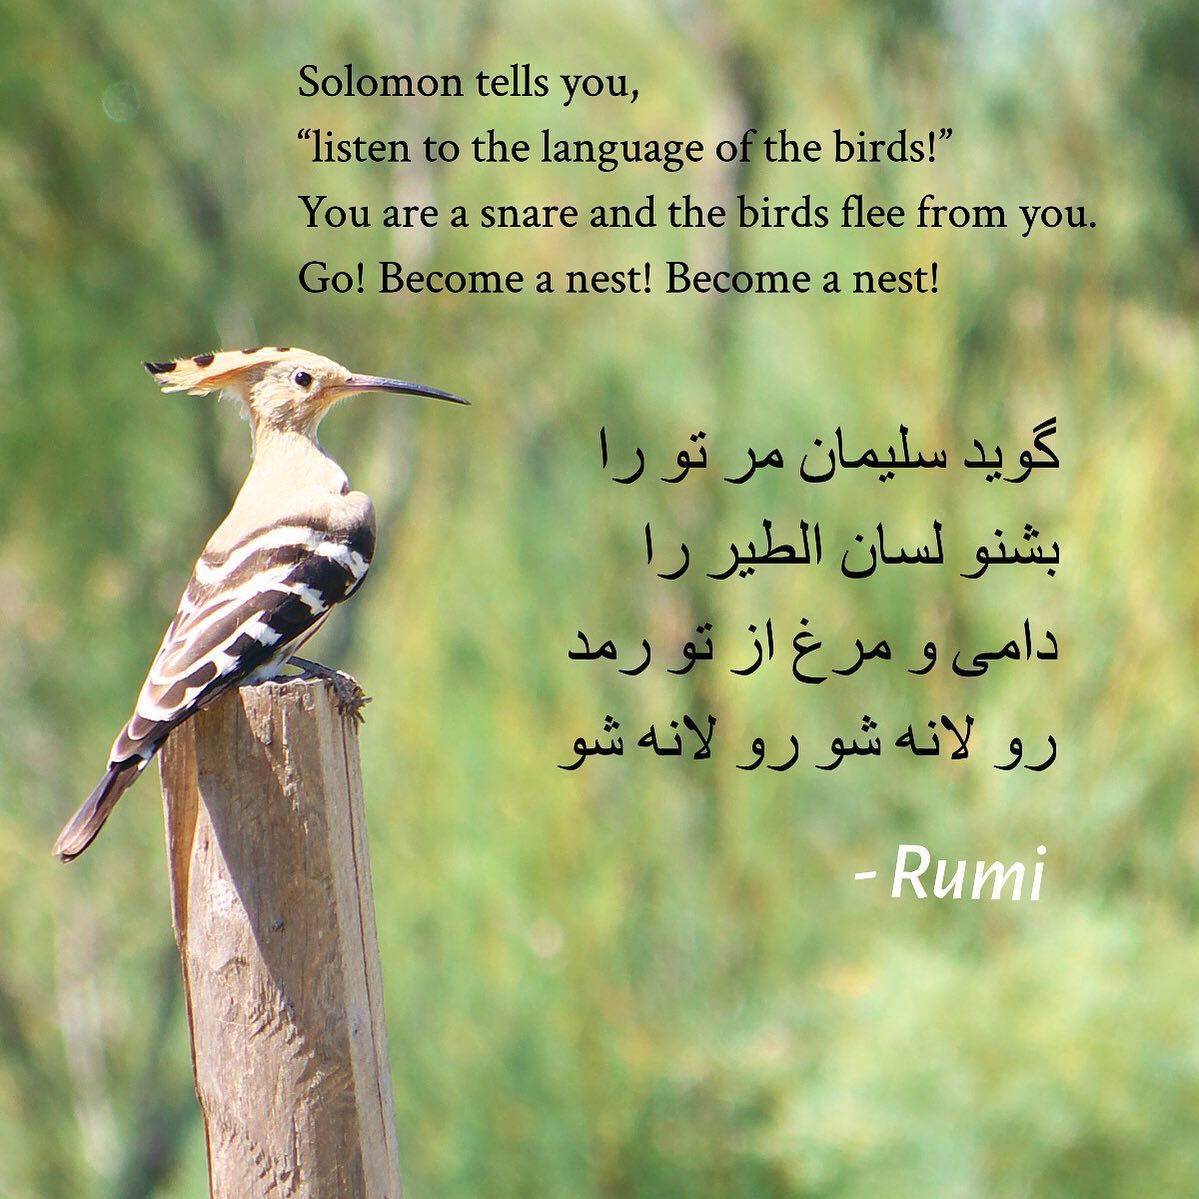 Solomon tells you, “Listen to the language of the birds” from Hilat Raha Kon – Rumi